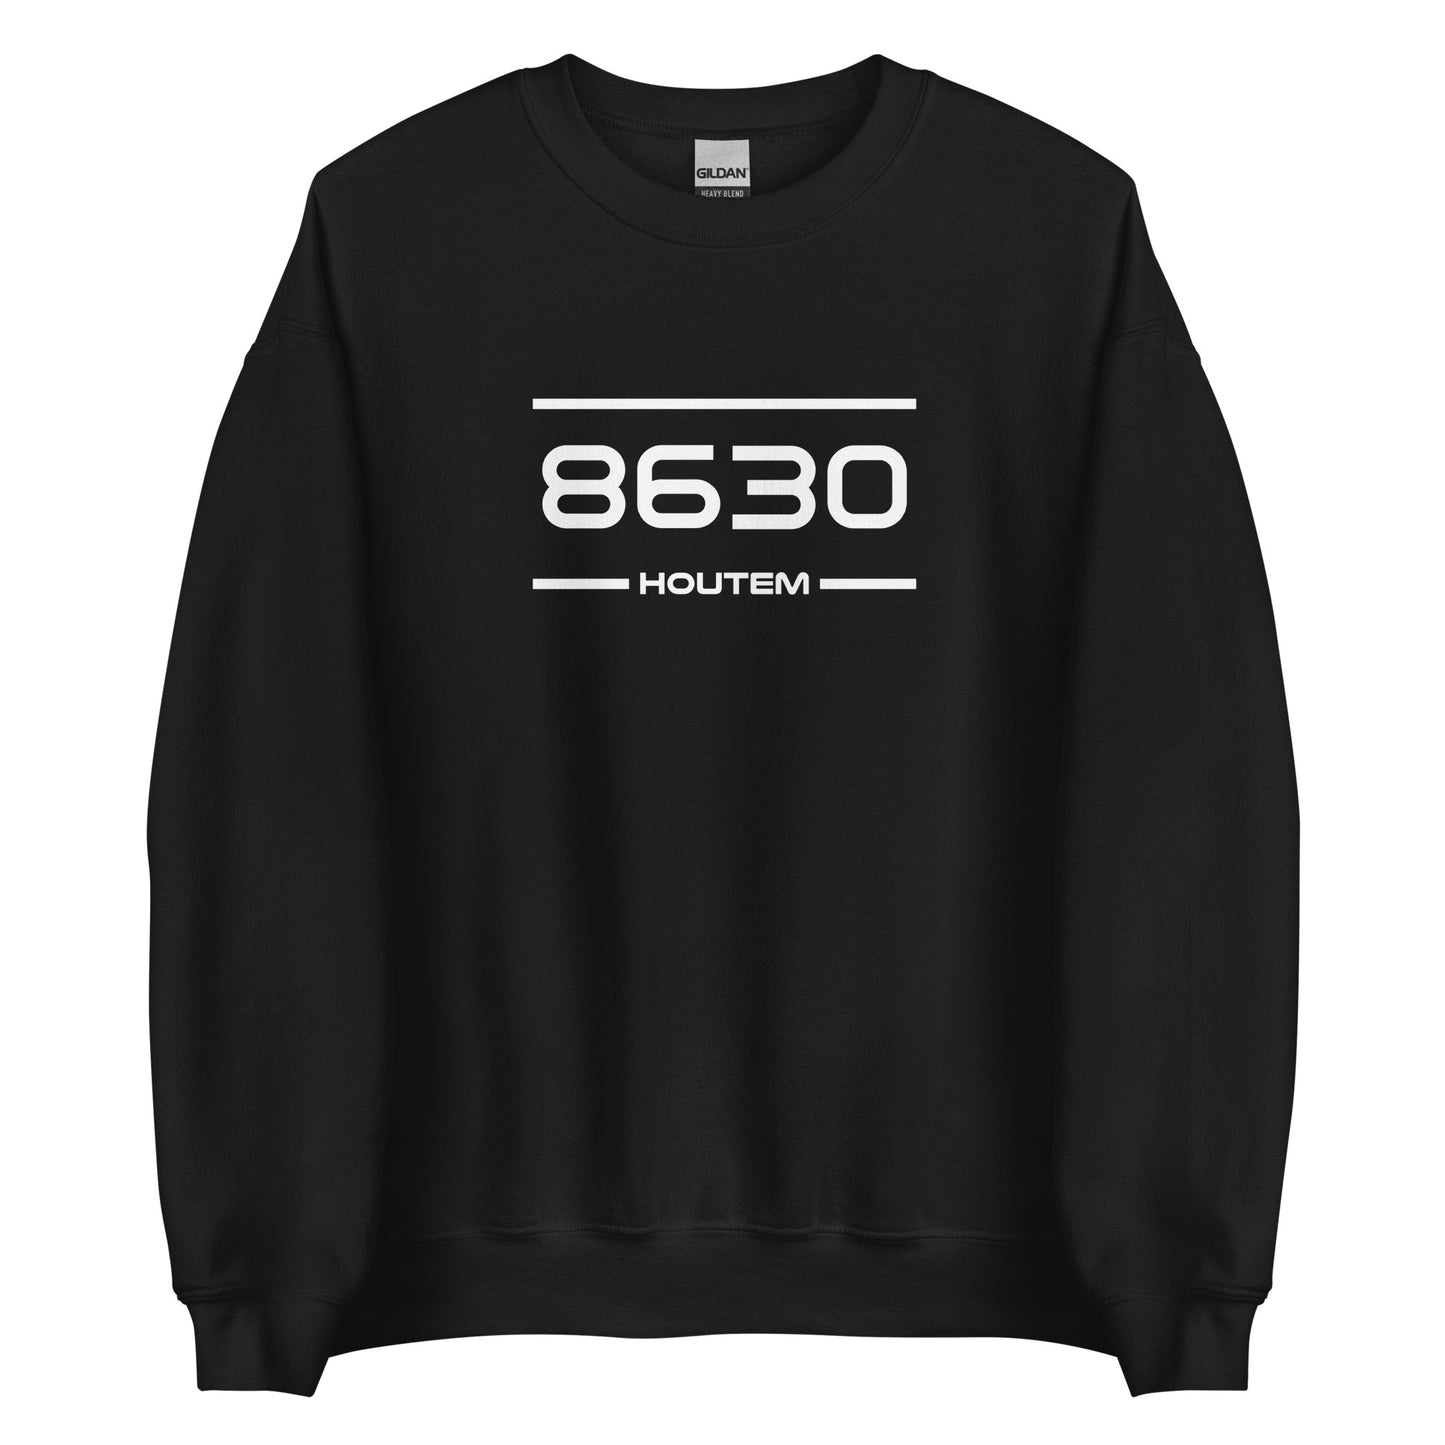 Sweater - 8630 - Houtem (M/V)